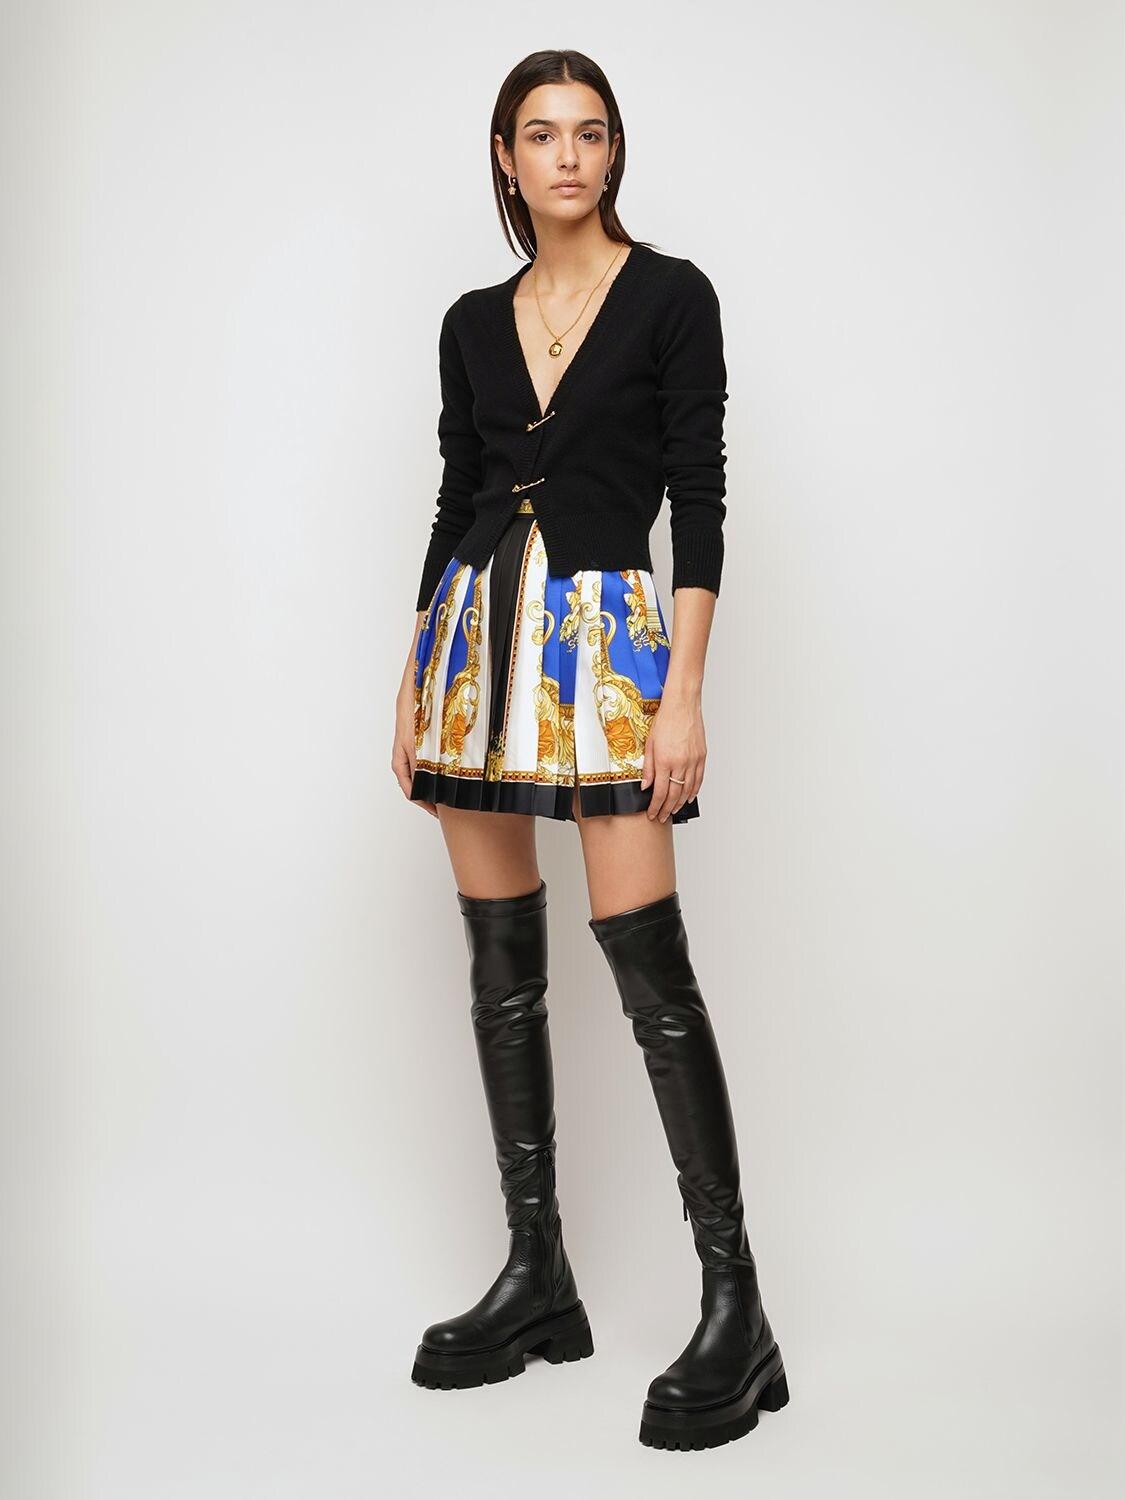 Versace Print Pleated Short Dress